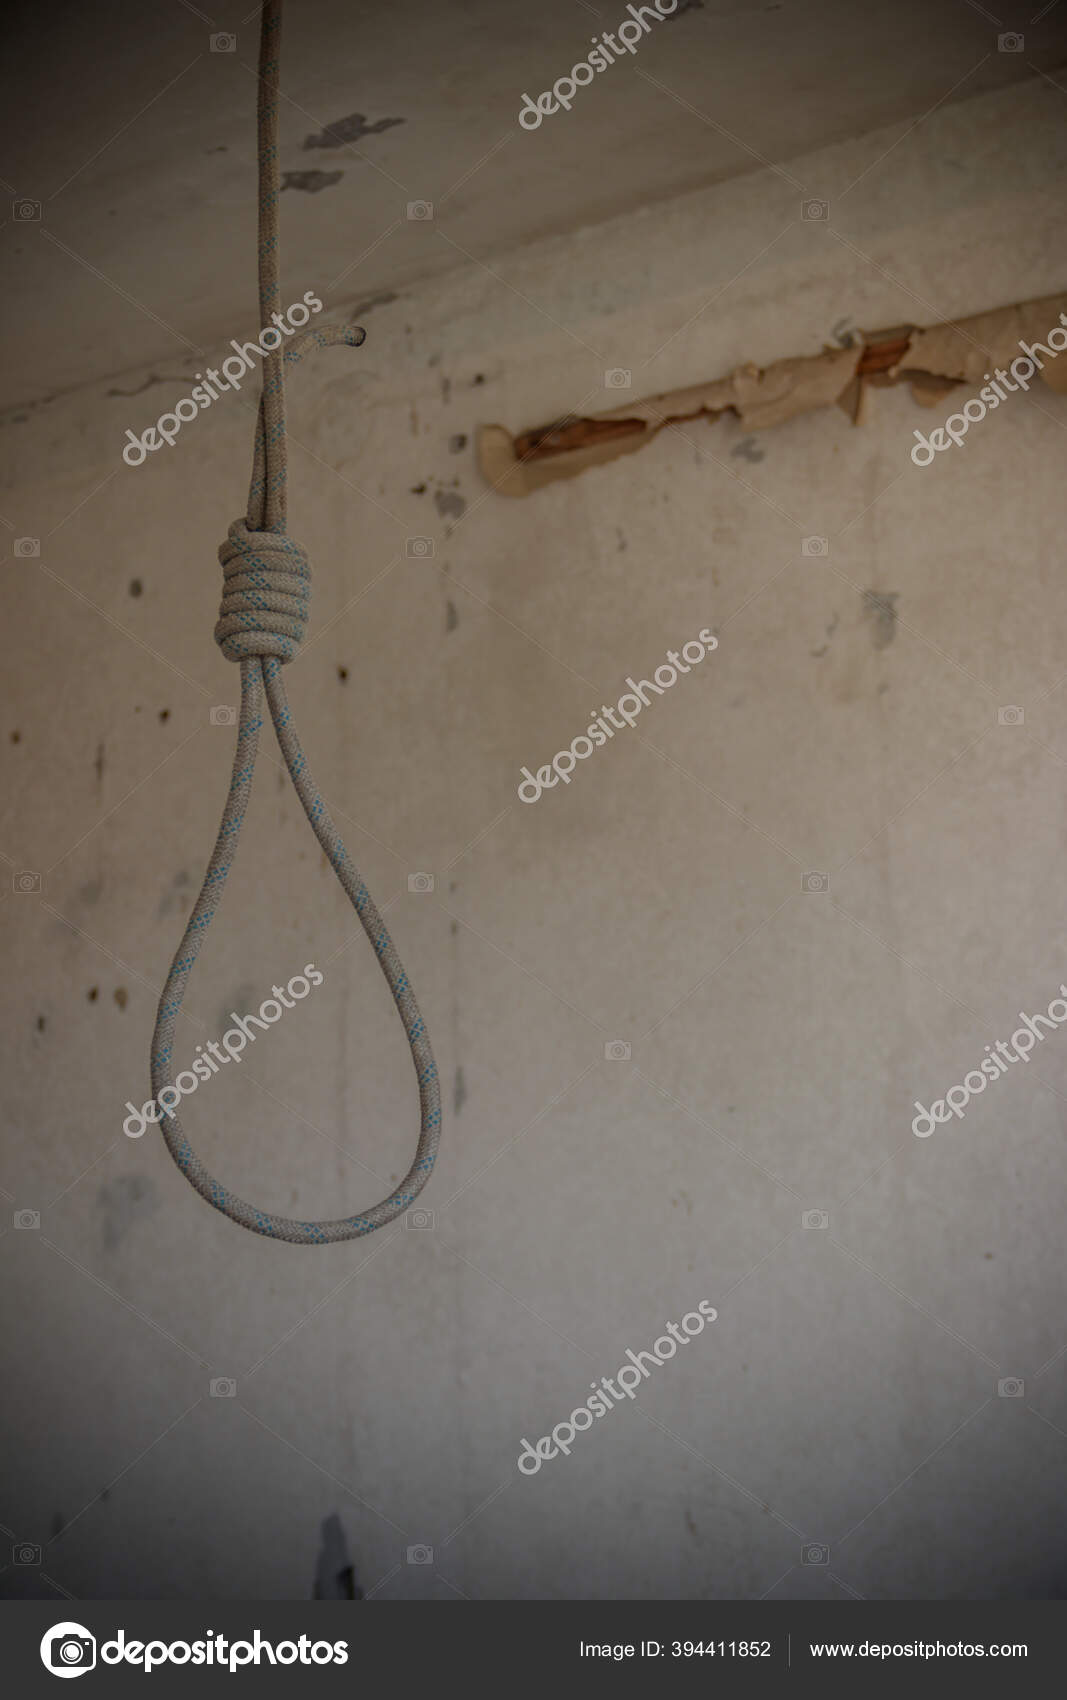 https://st4.depositphotos.com/5669842/39441/i/1600/depositphotos_394411852-stock-photo-deadly-loop-hanging-ceiling-abandoned.jpg